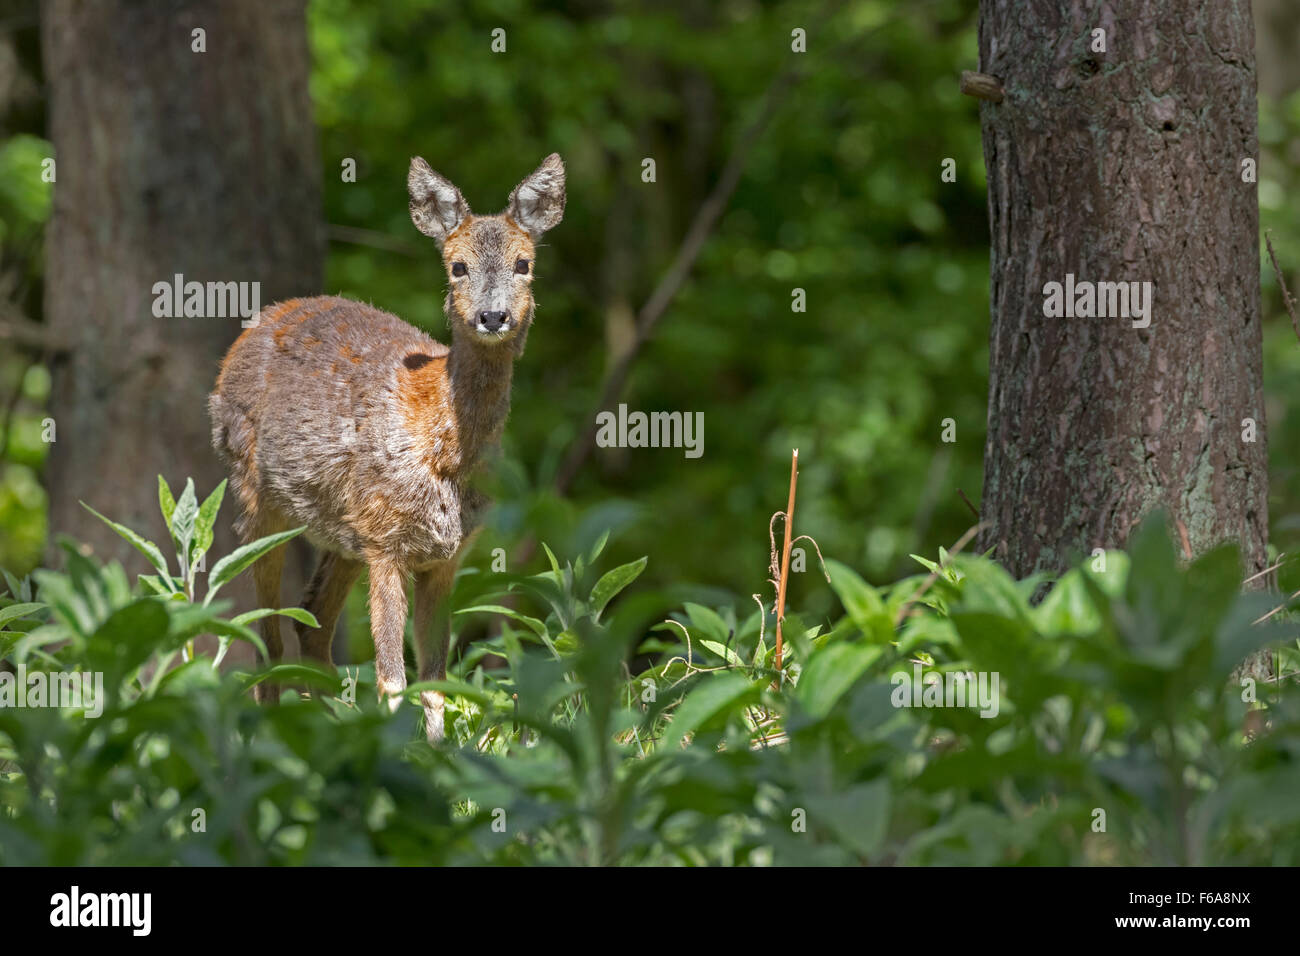 European roe deer standing on a glade / Capreolus capreolus Stock Photo